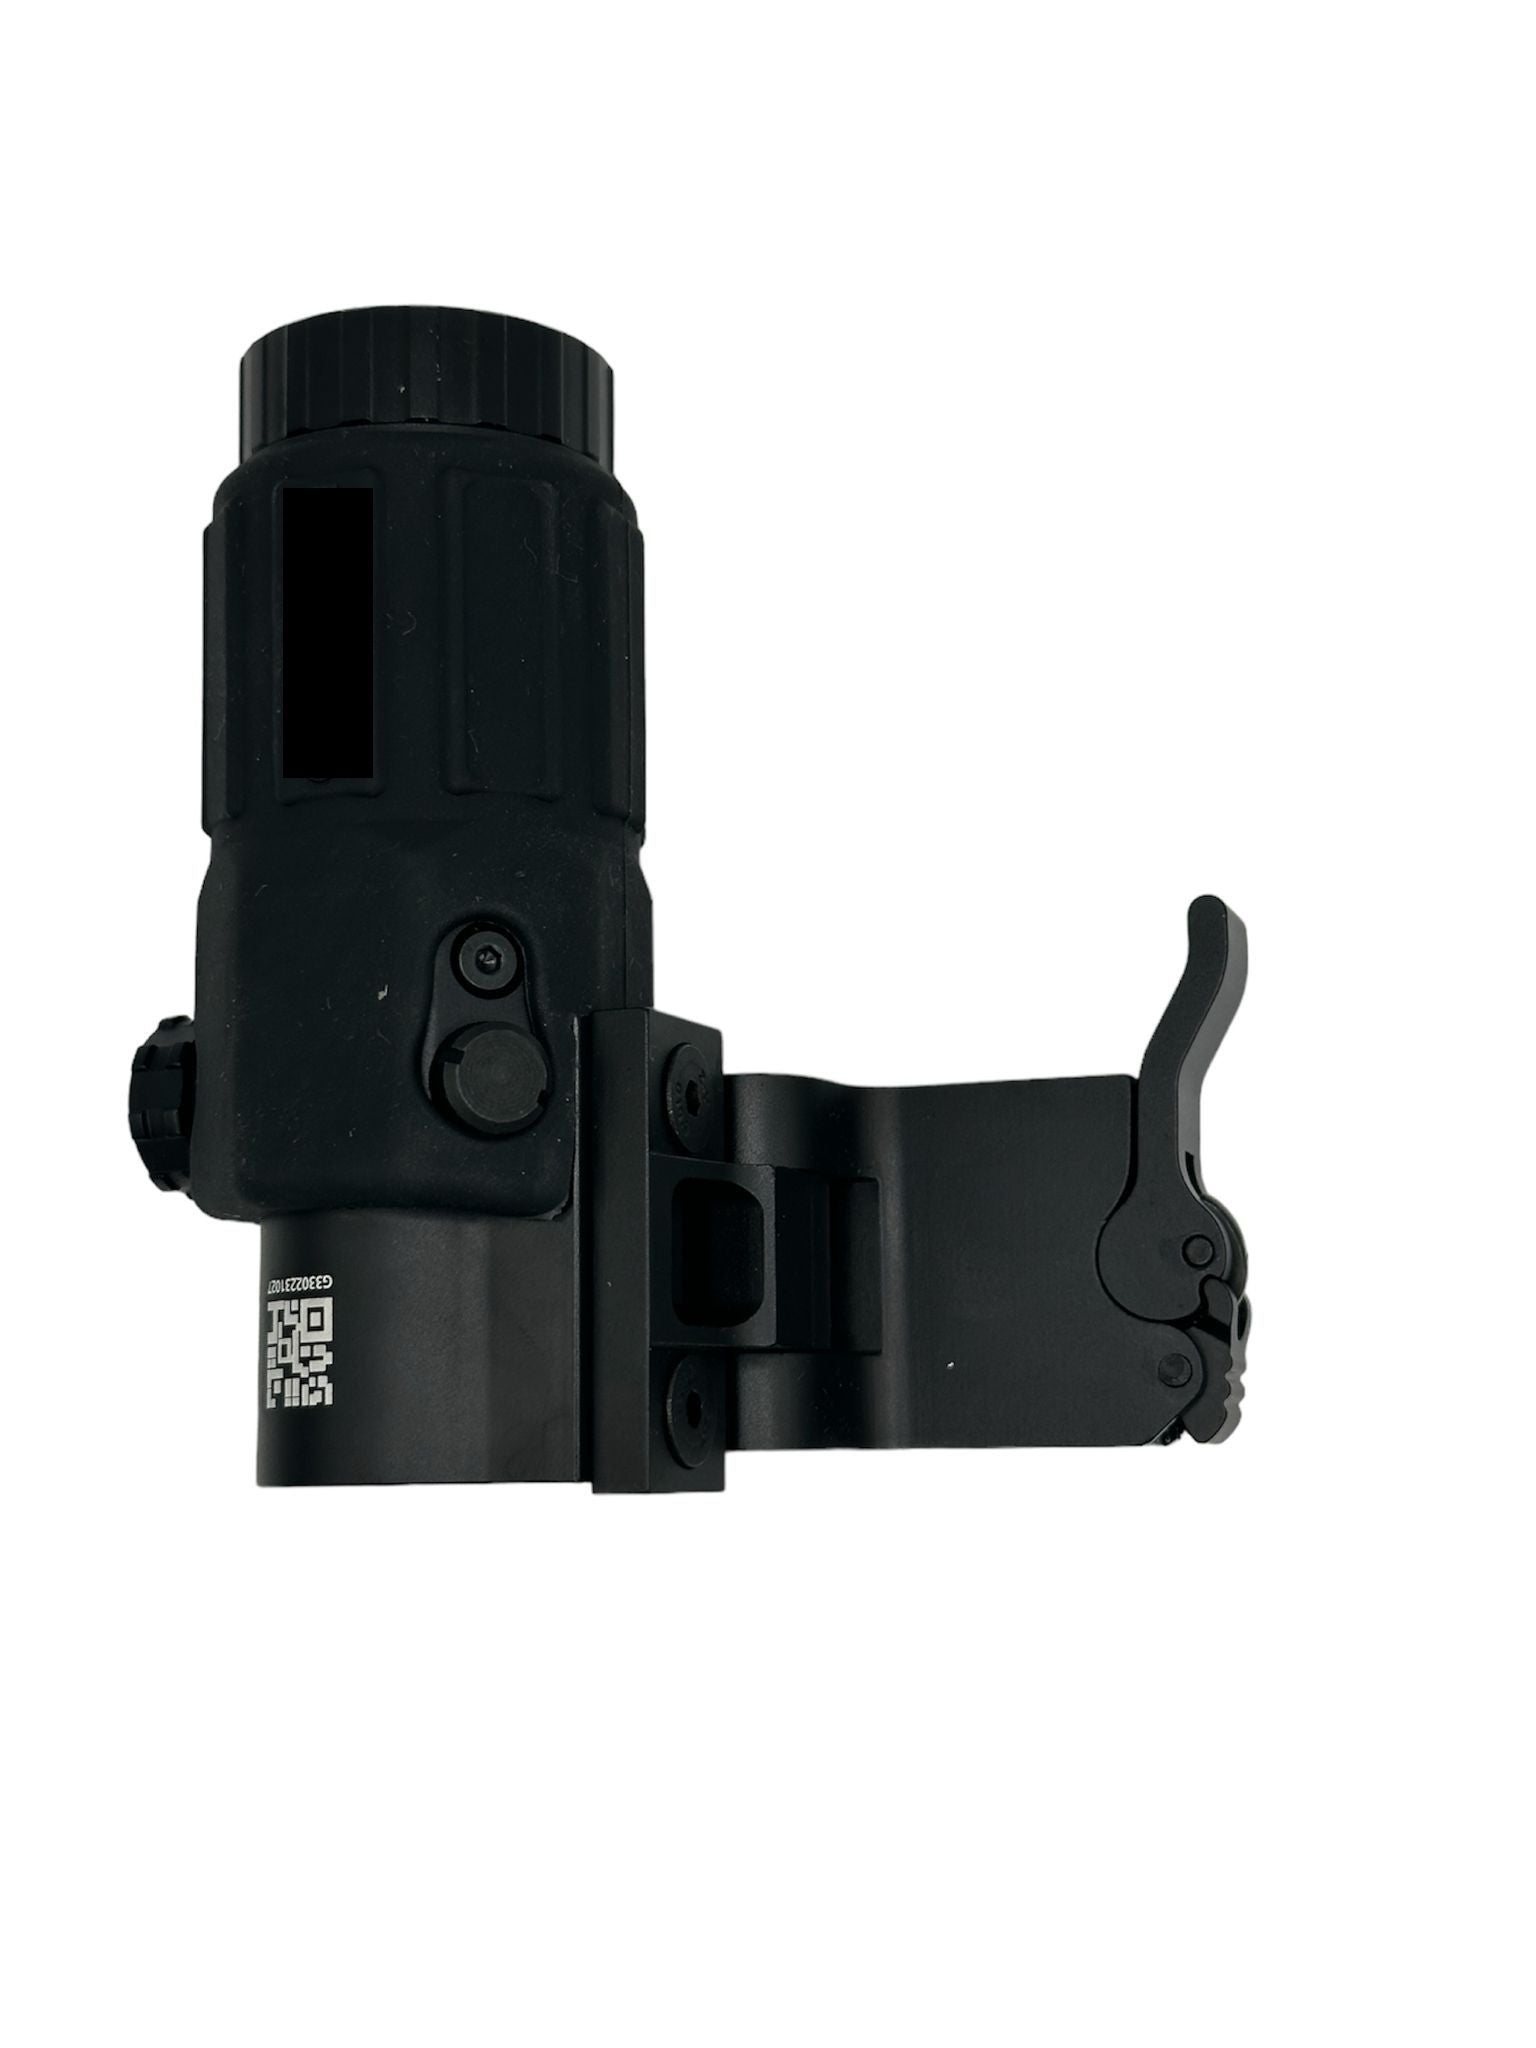 Kit EXPS + Magnifier Style G33 3x - Black